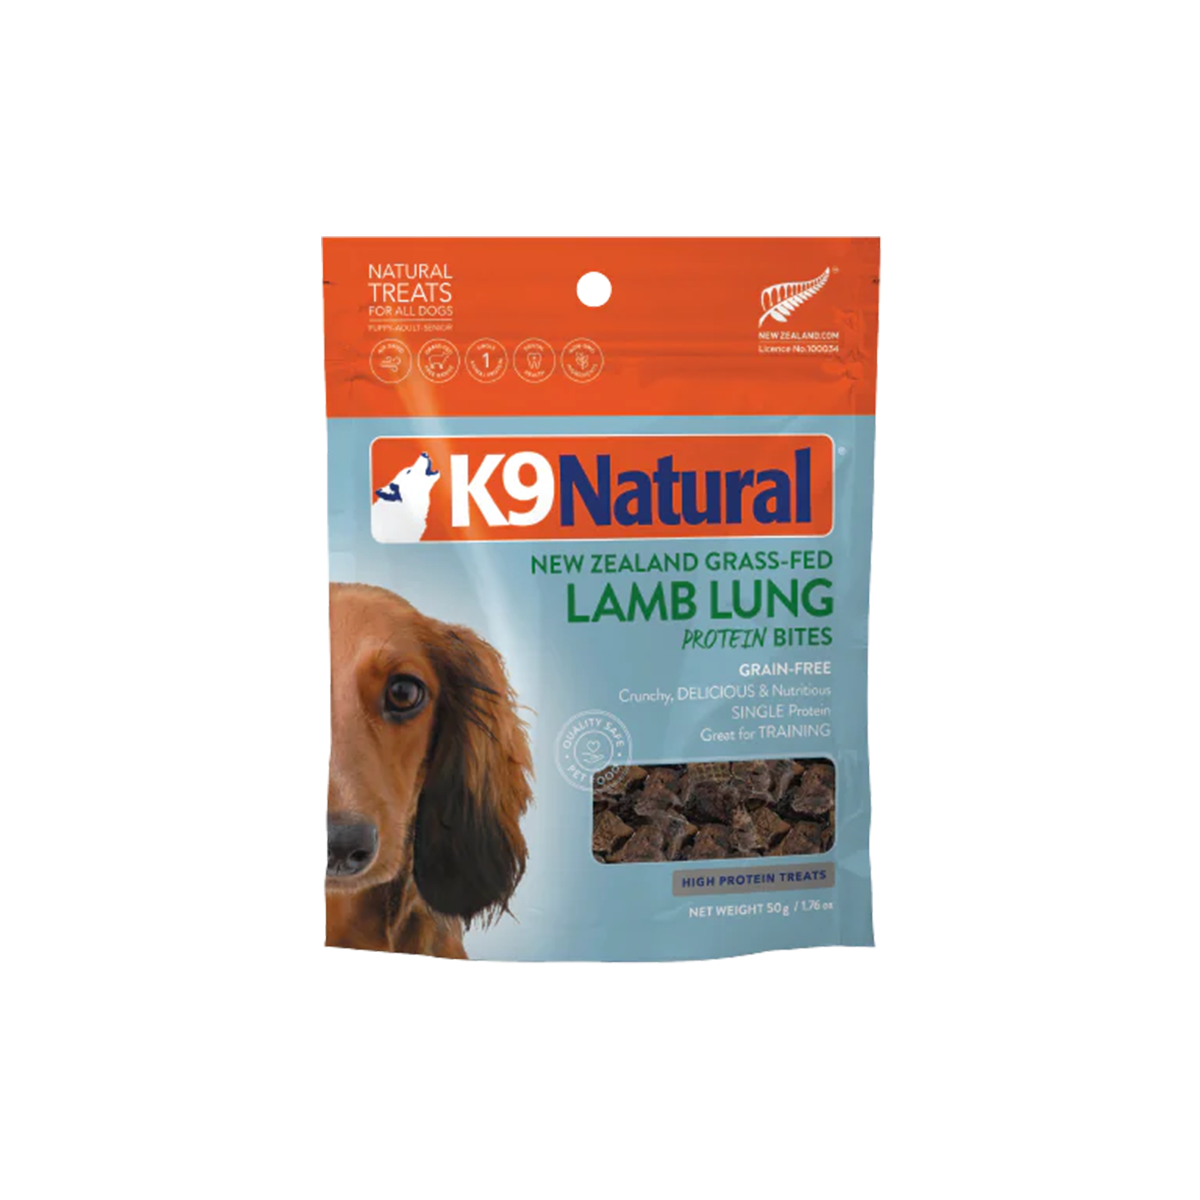 K9 Natural Air-Dried Protein Bites Dog Treats - Lamb Lung